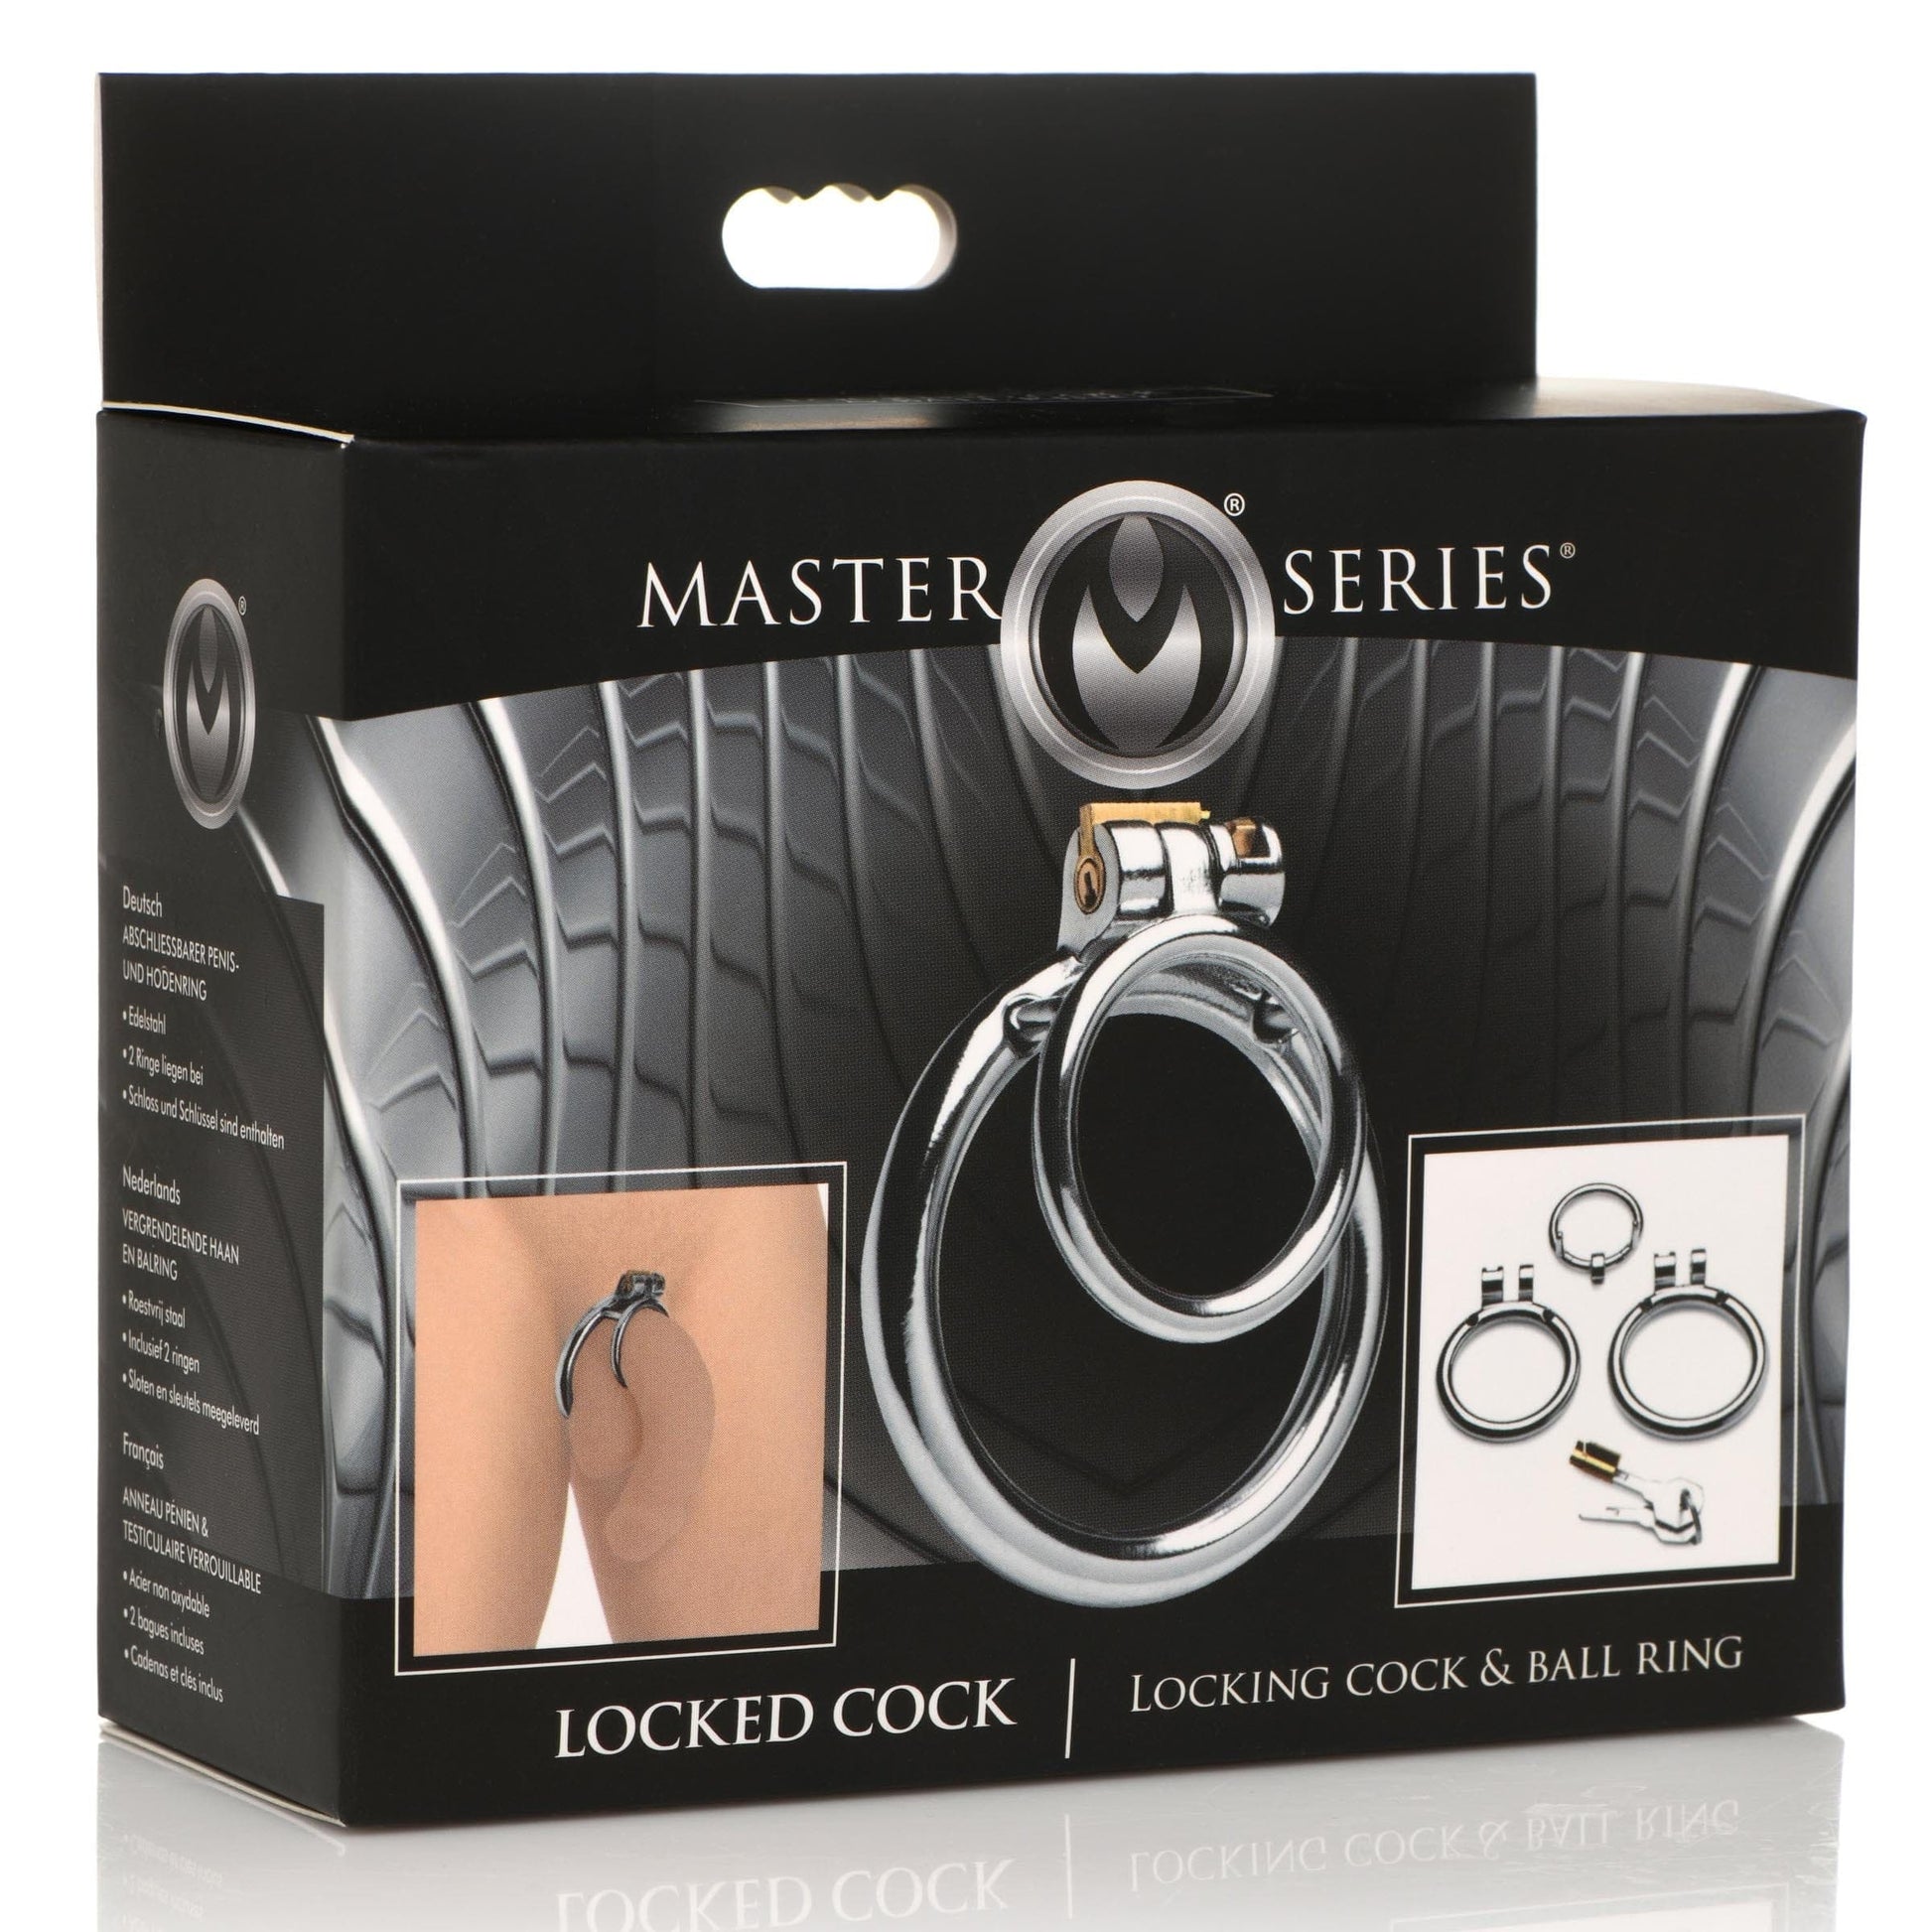 Master Series Cock Ring Locking Cock And Ball Ring at the Haus of Shag